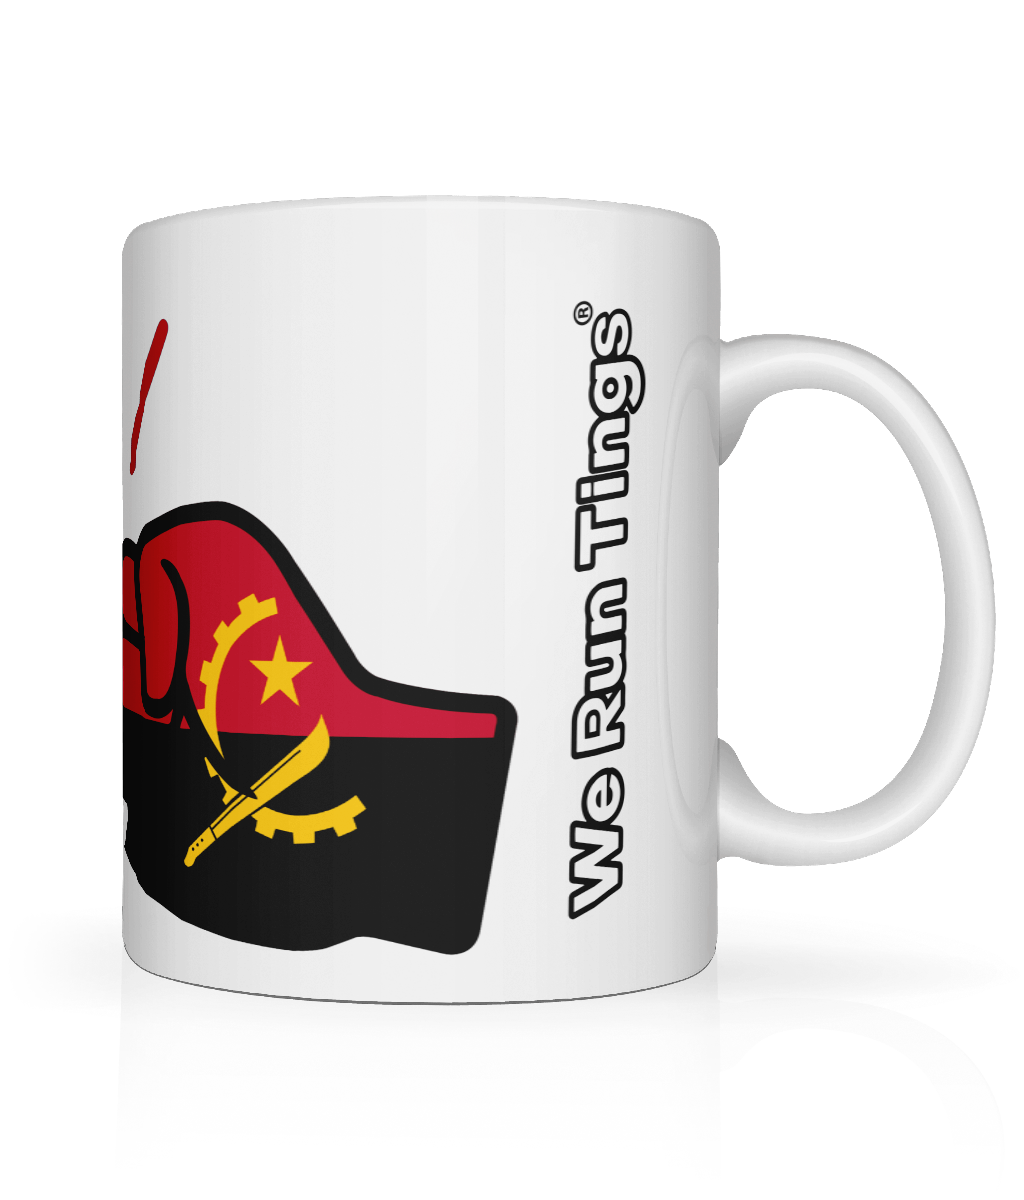 We Run Tings, Angola, Tea, Coffee Ceramic Mug, Cup, White, 11oz